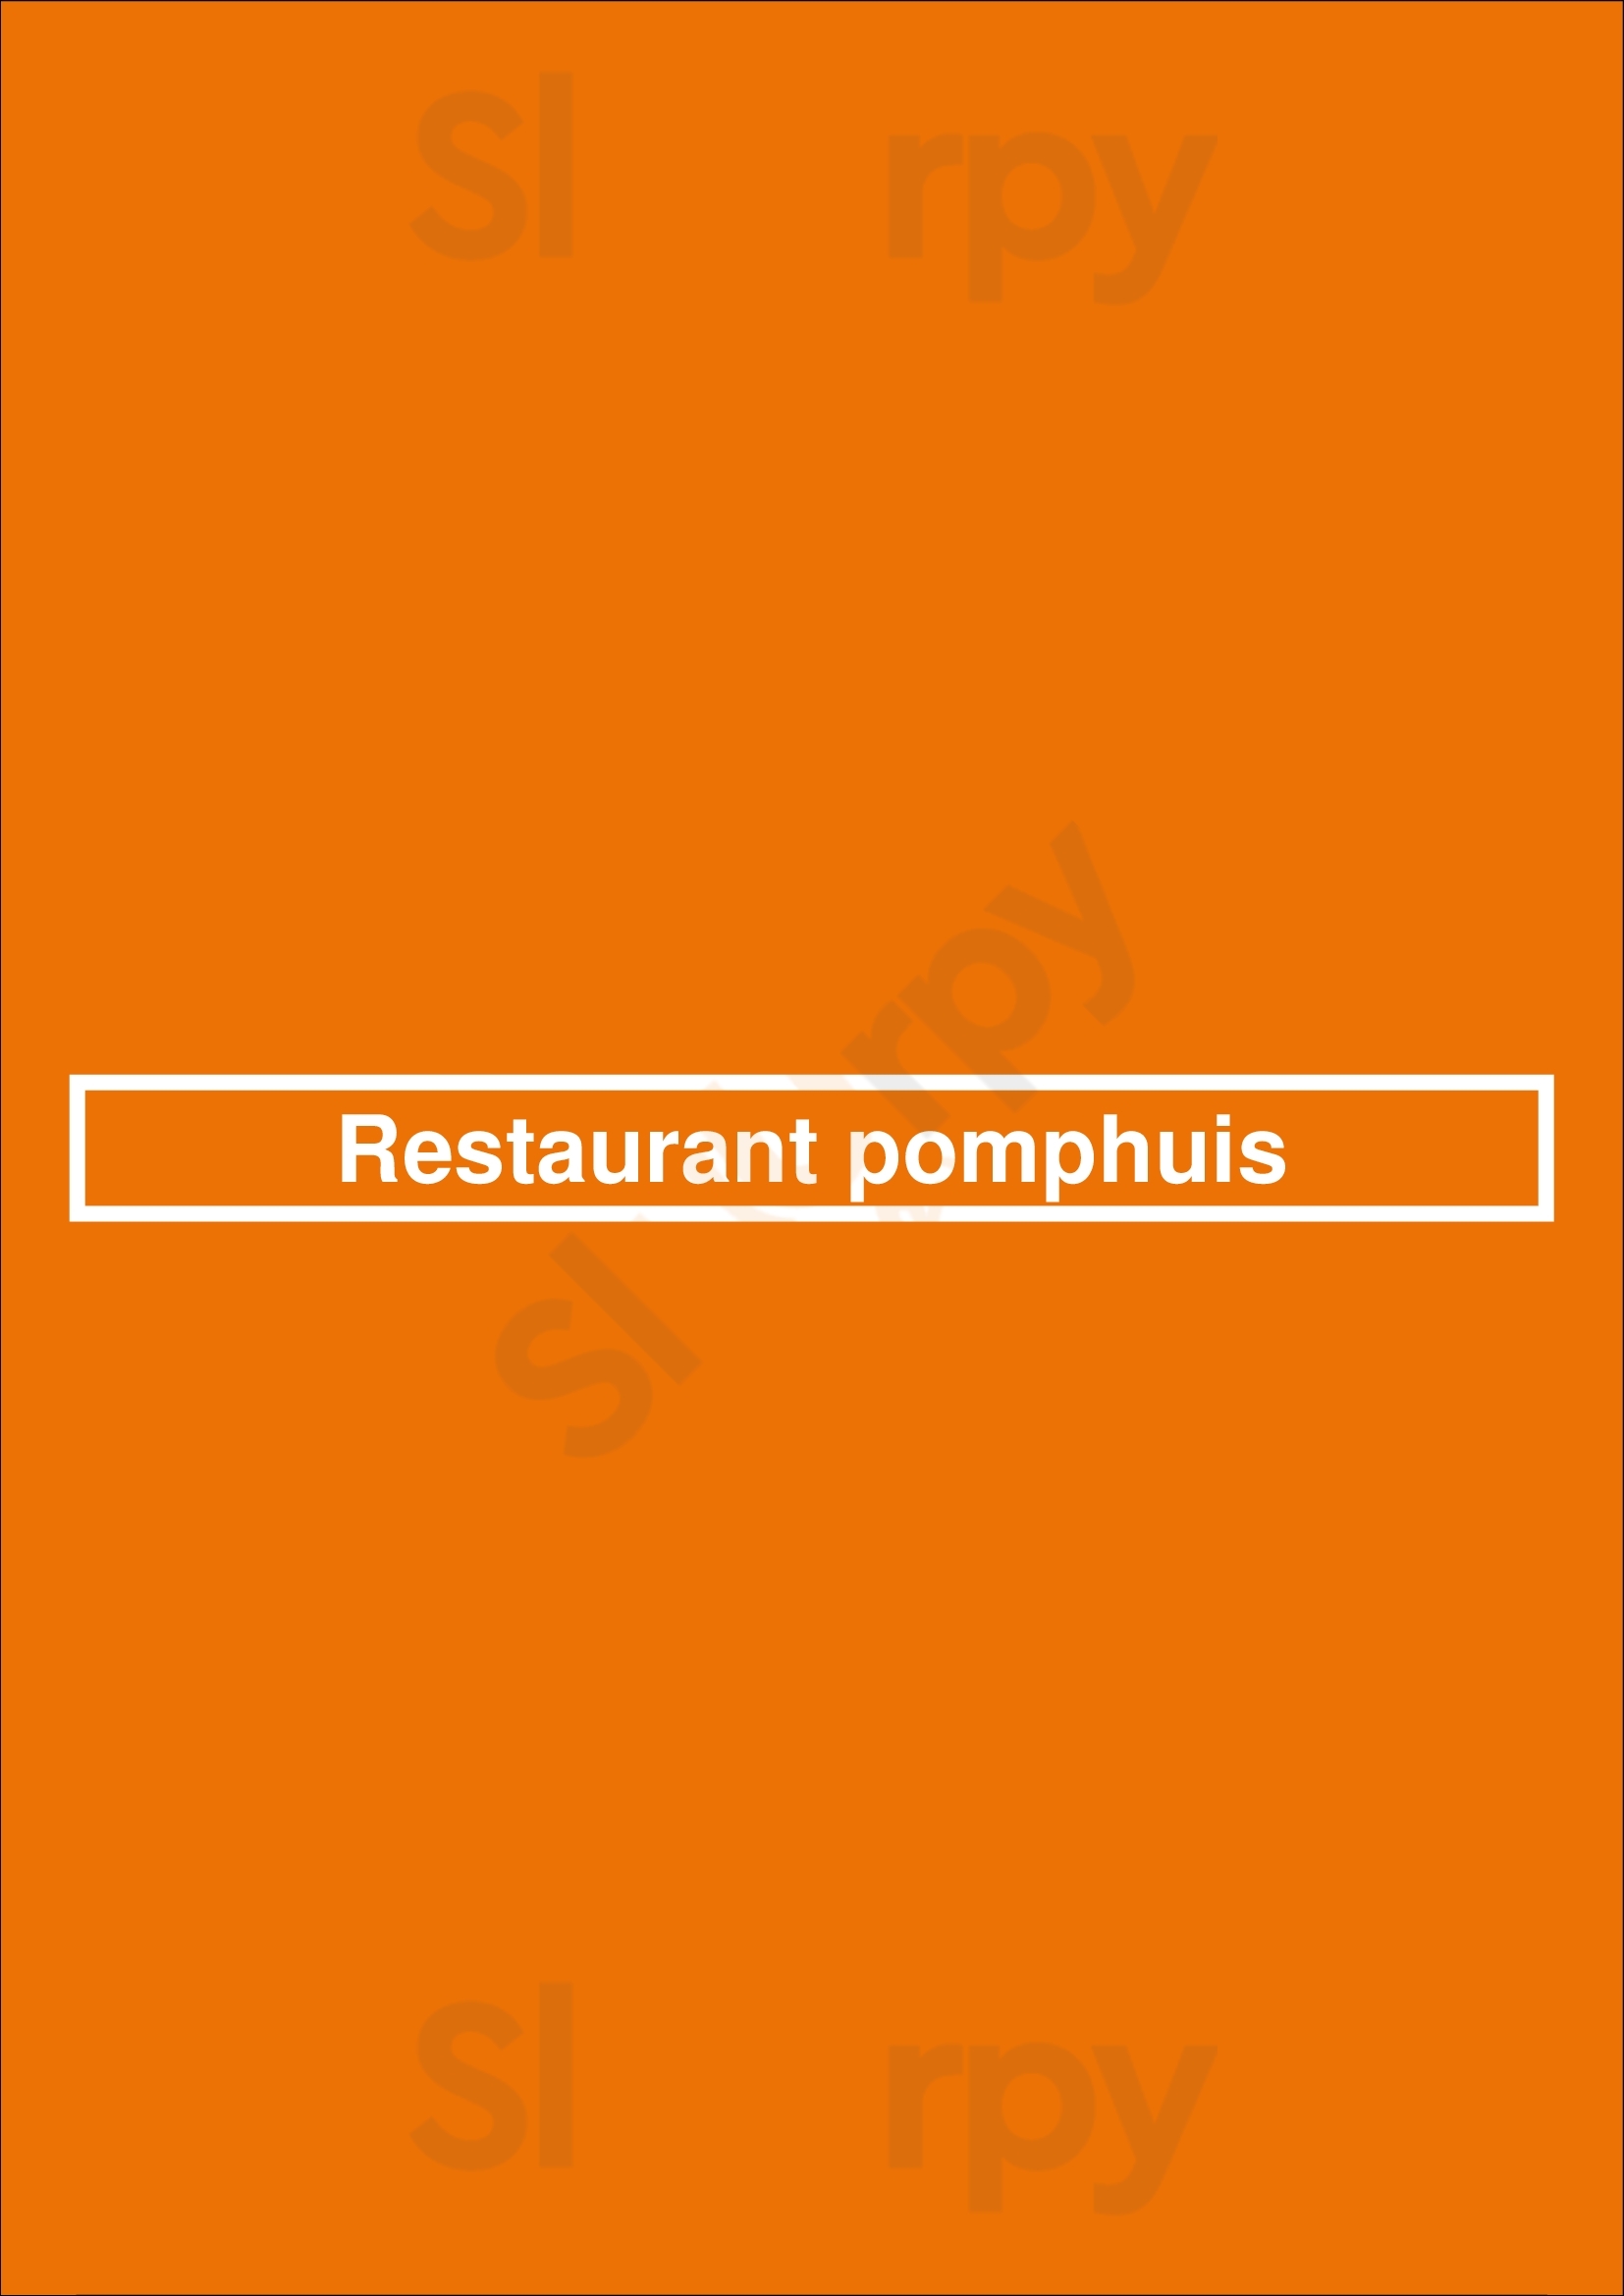 Restaurant Pomphuis Ede Menu - 1